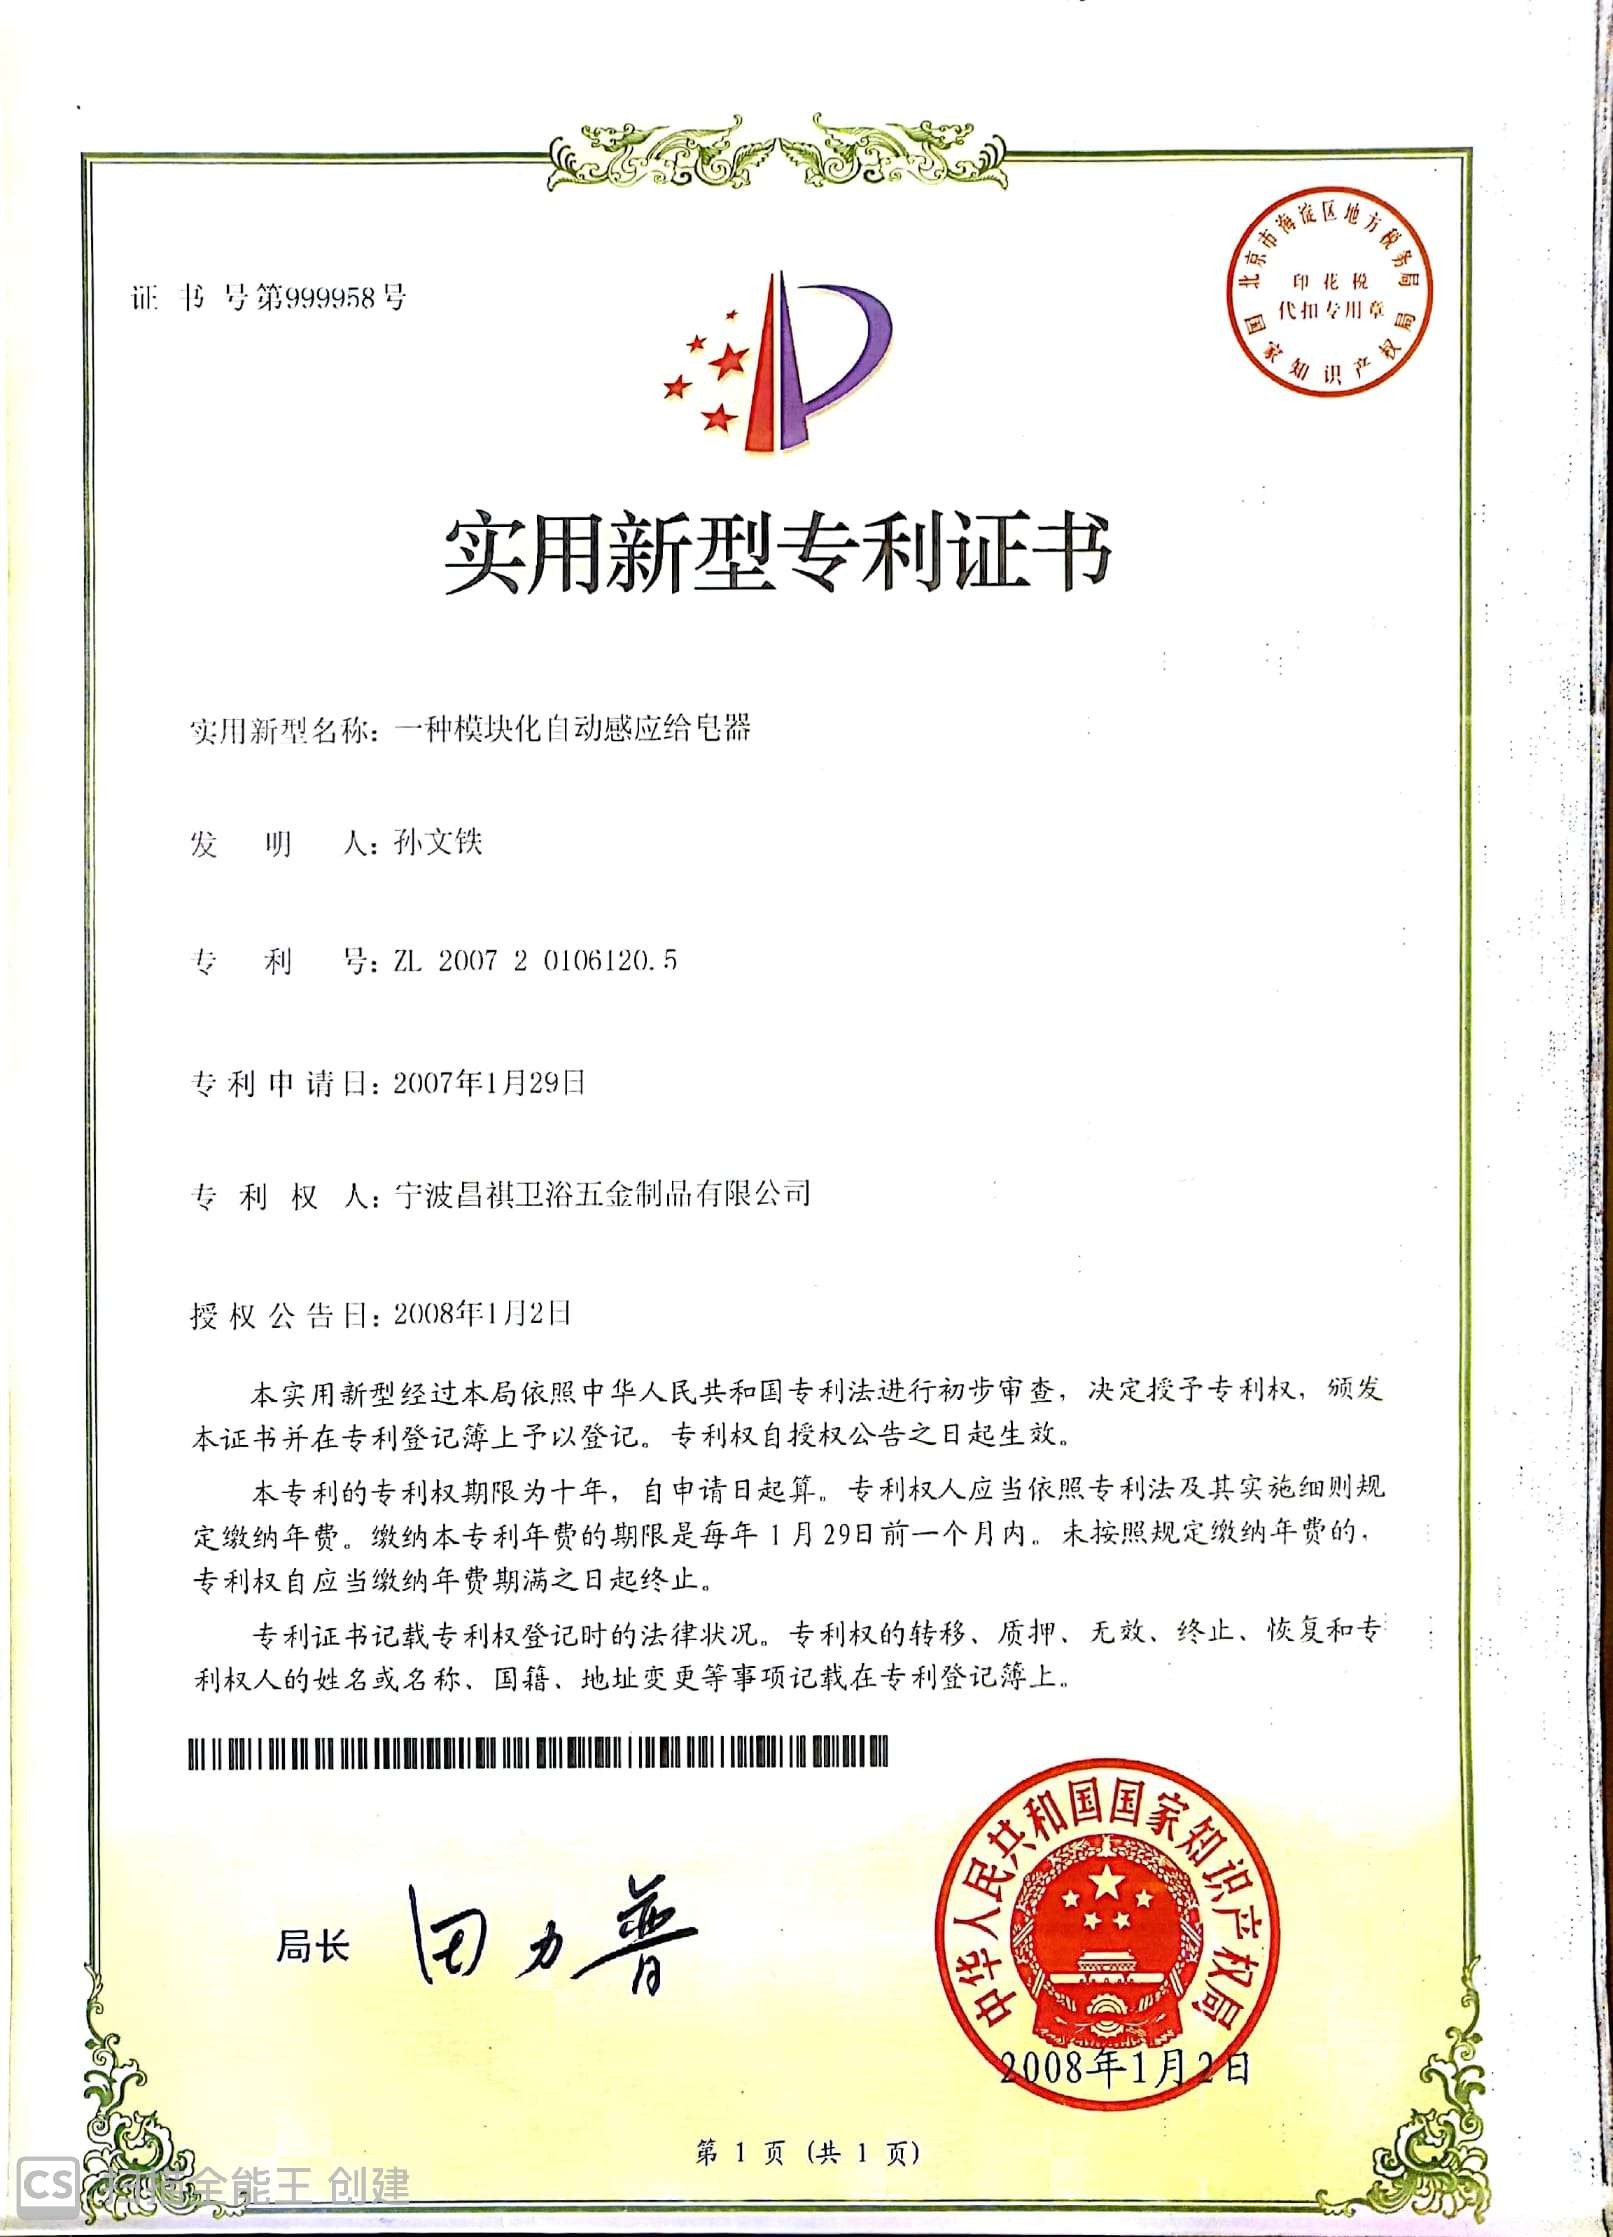 Ningbo Changqi Bathroom Hardware Industry Co., Ltd. Certifications